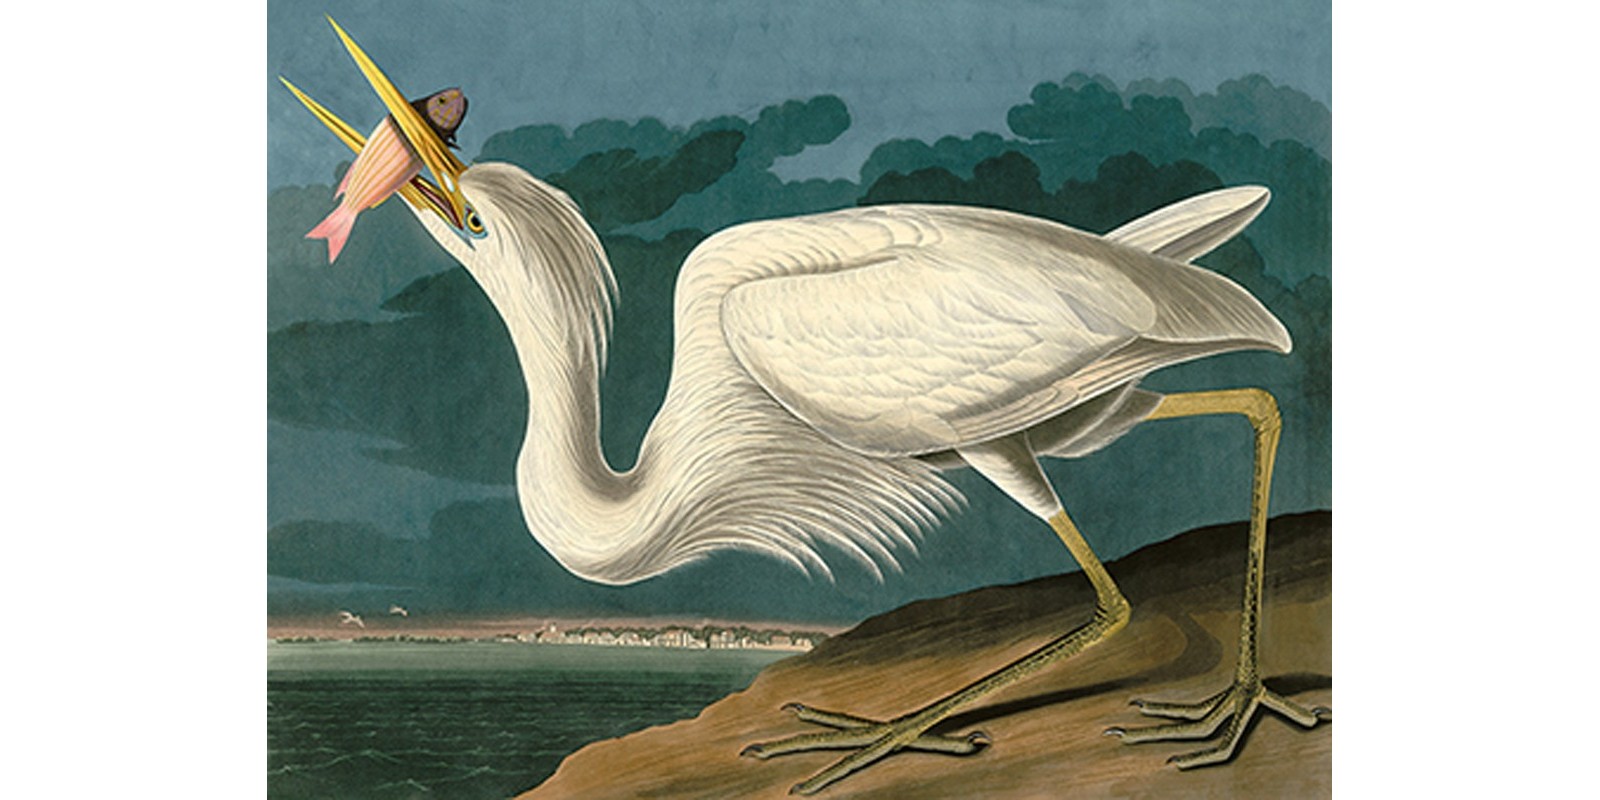 John James Audubon - Great White Heron